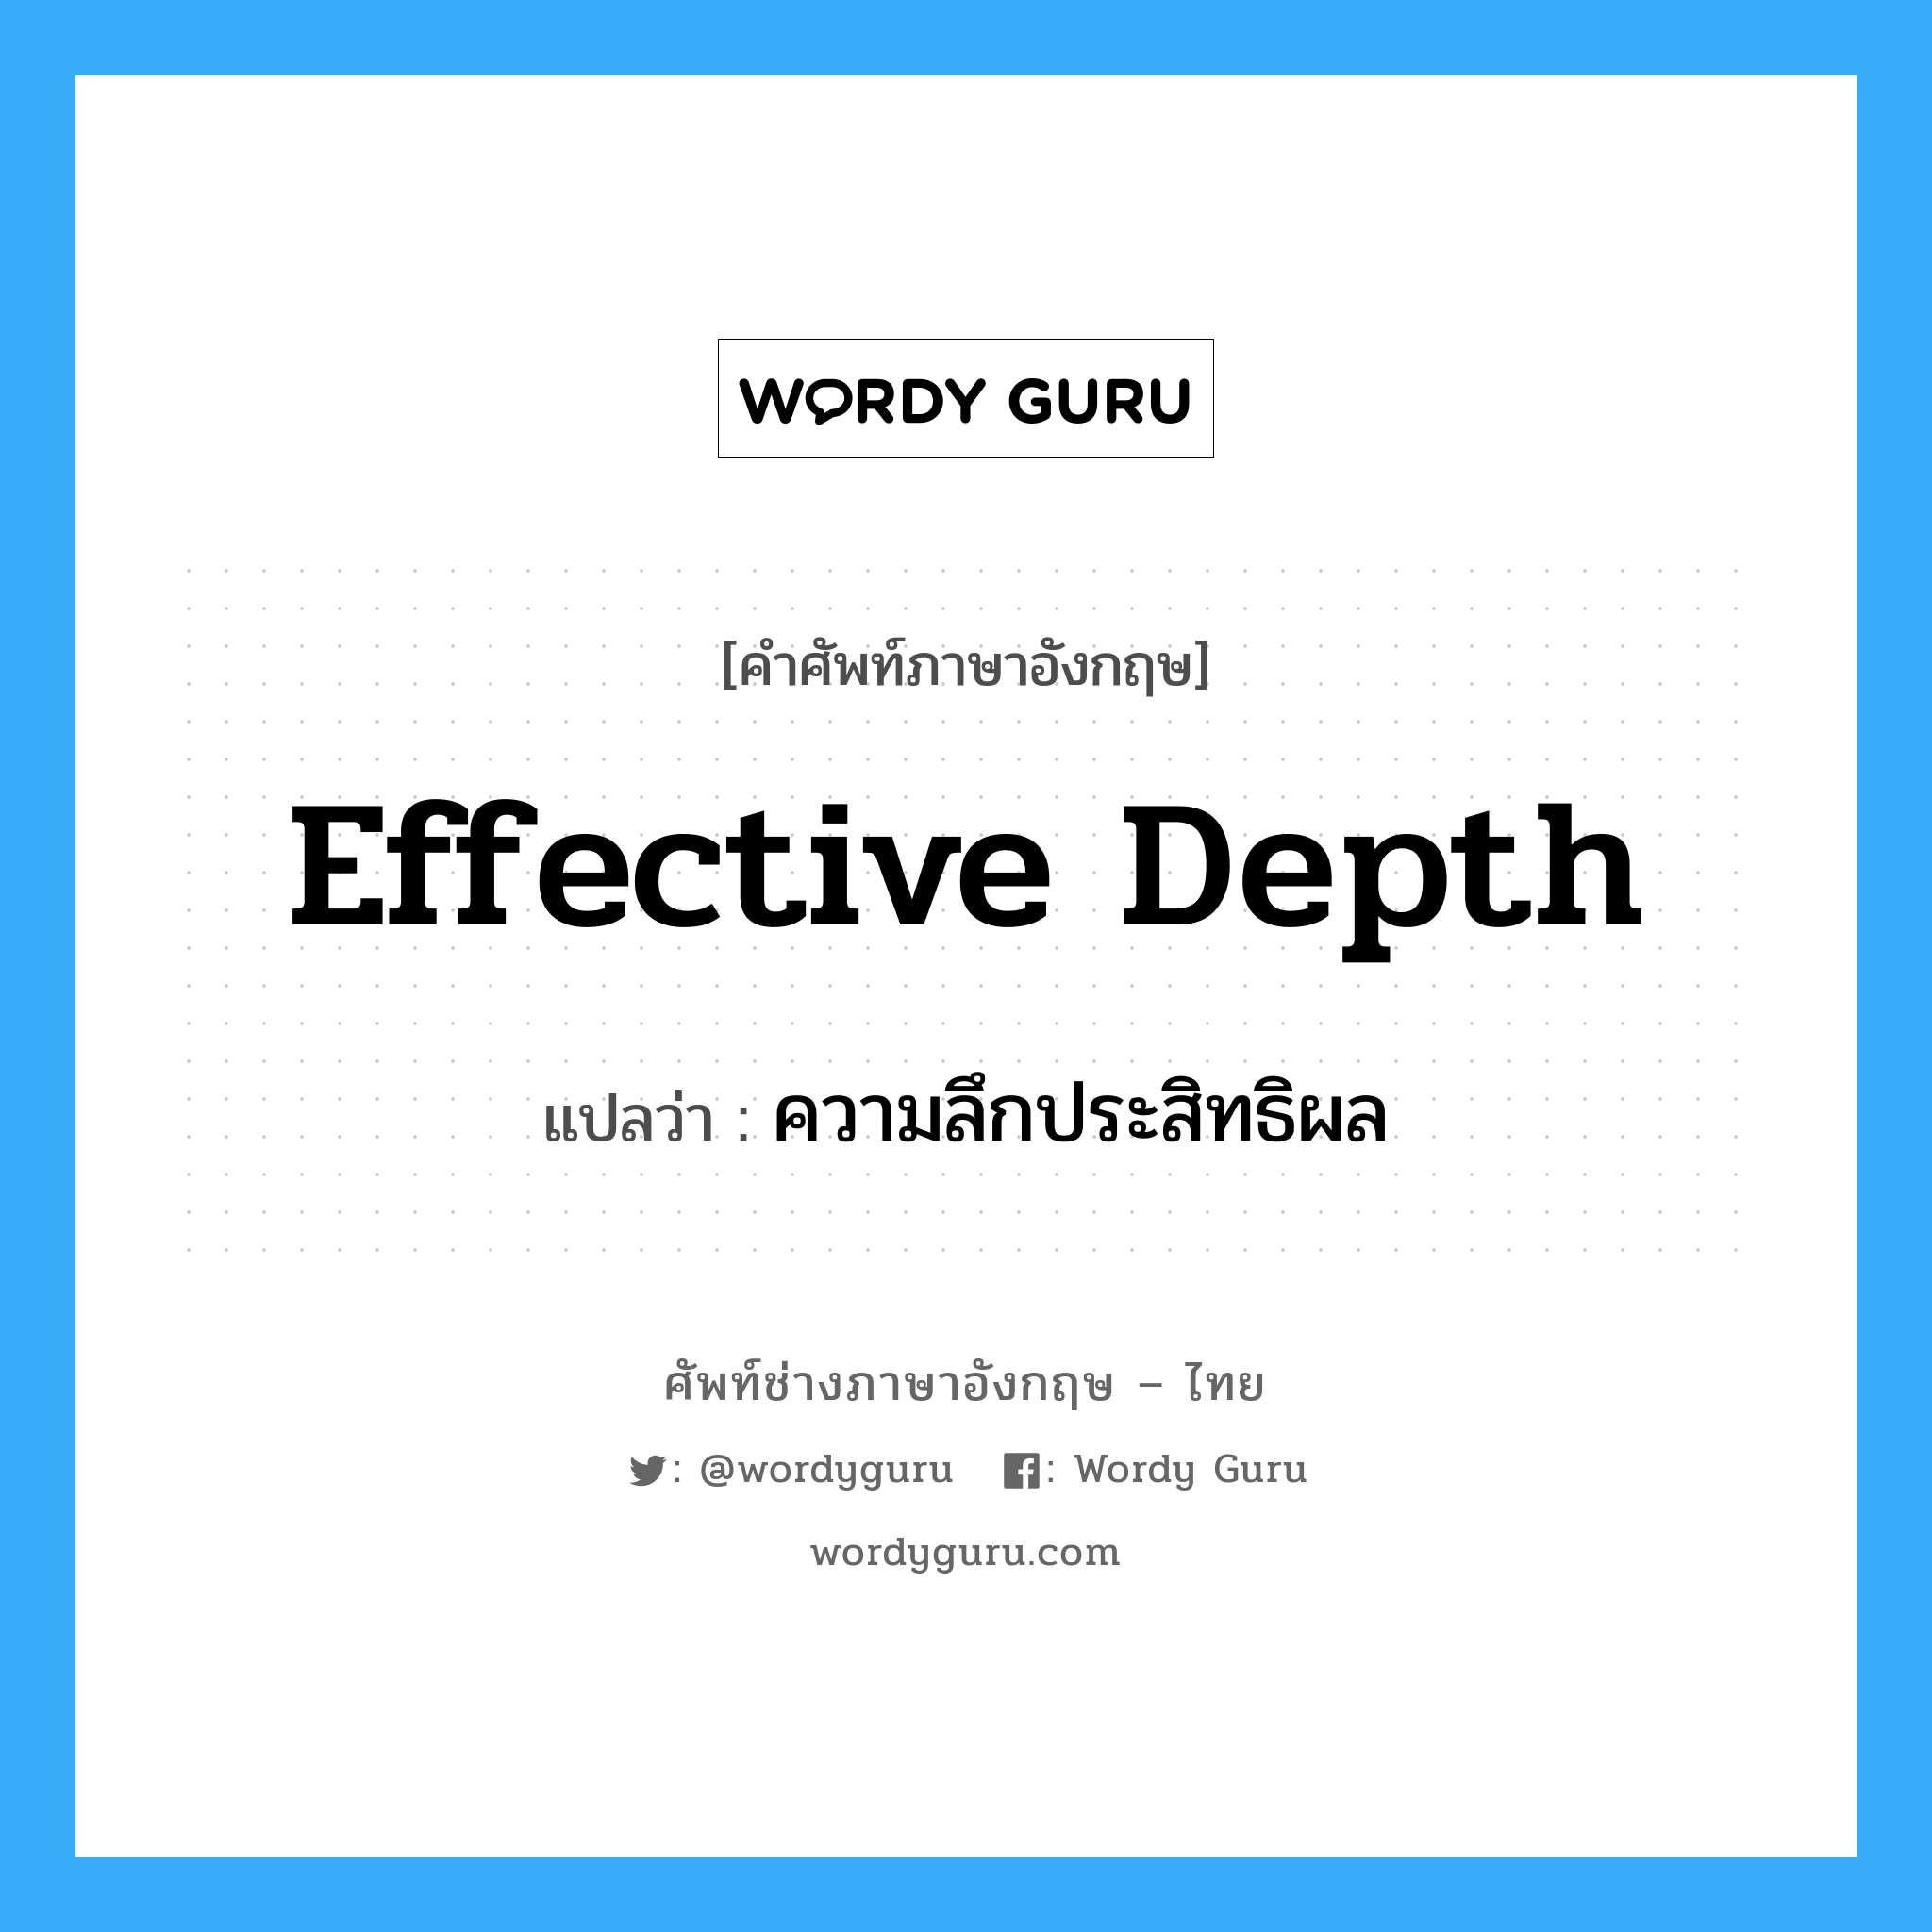 effective depth แปลว่า?, คำศัพท์ช่างภาษาอังกฤษ - ไทย effective depth คำศัพท์ภาษาอังกฤษ effective depth แปลว่า ความลึกประสิทธิผล